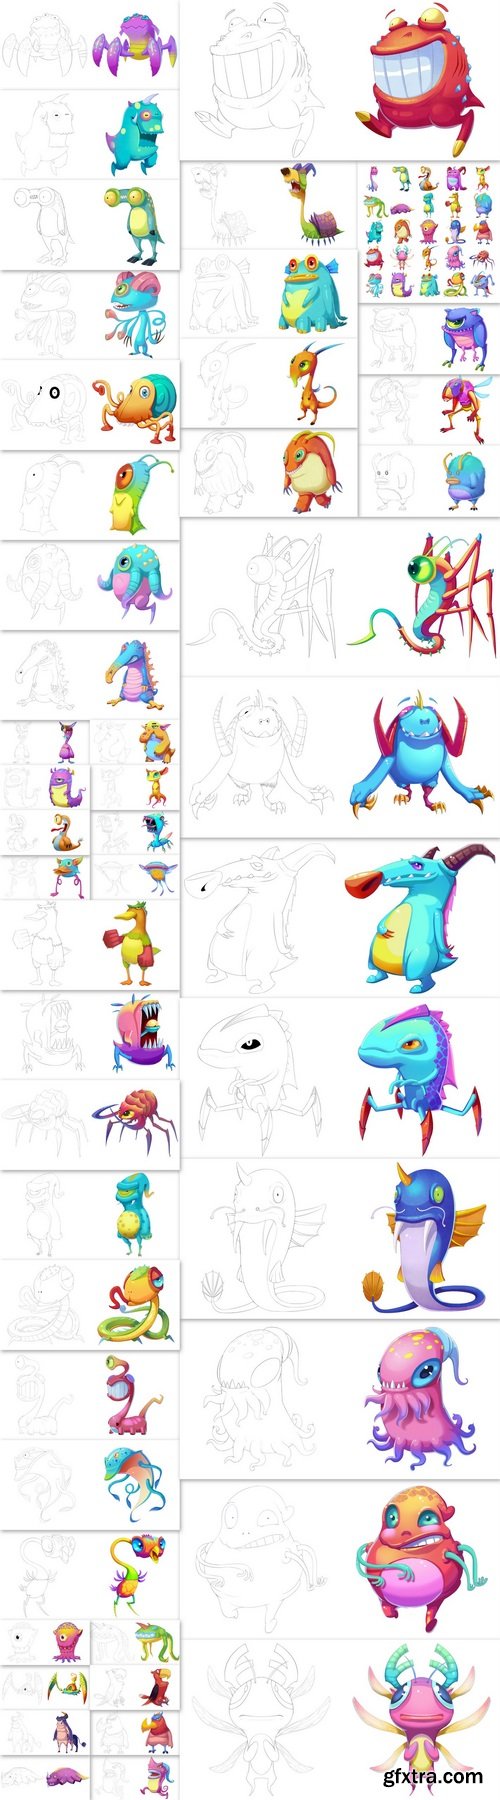 Monster Creature Character Design